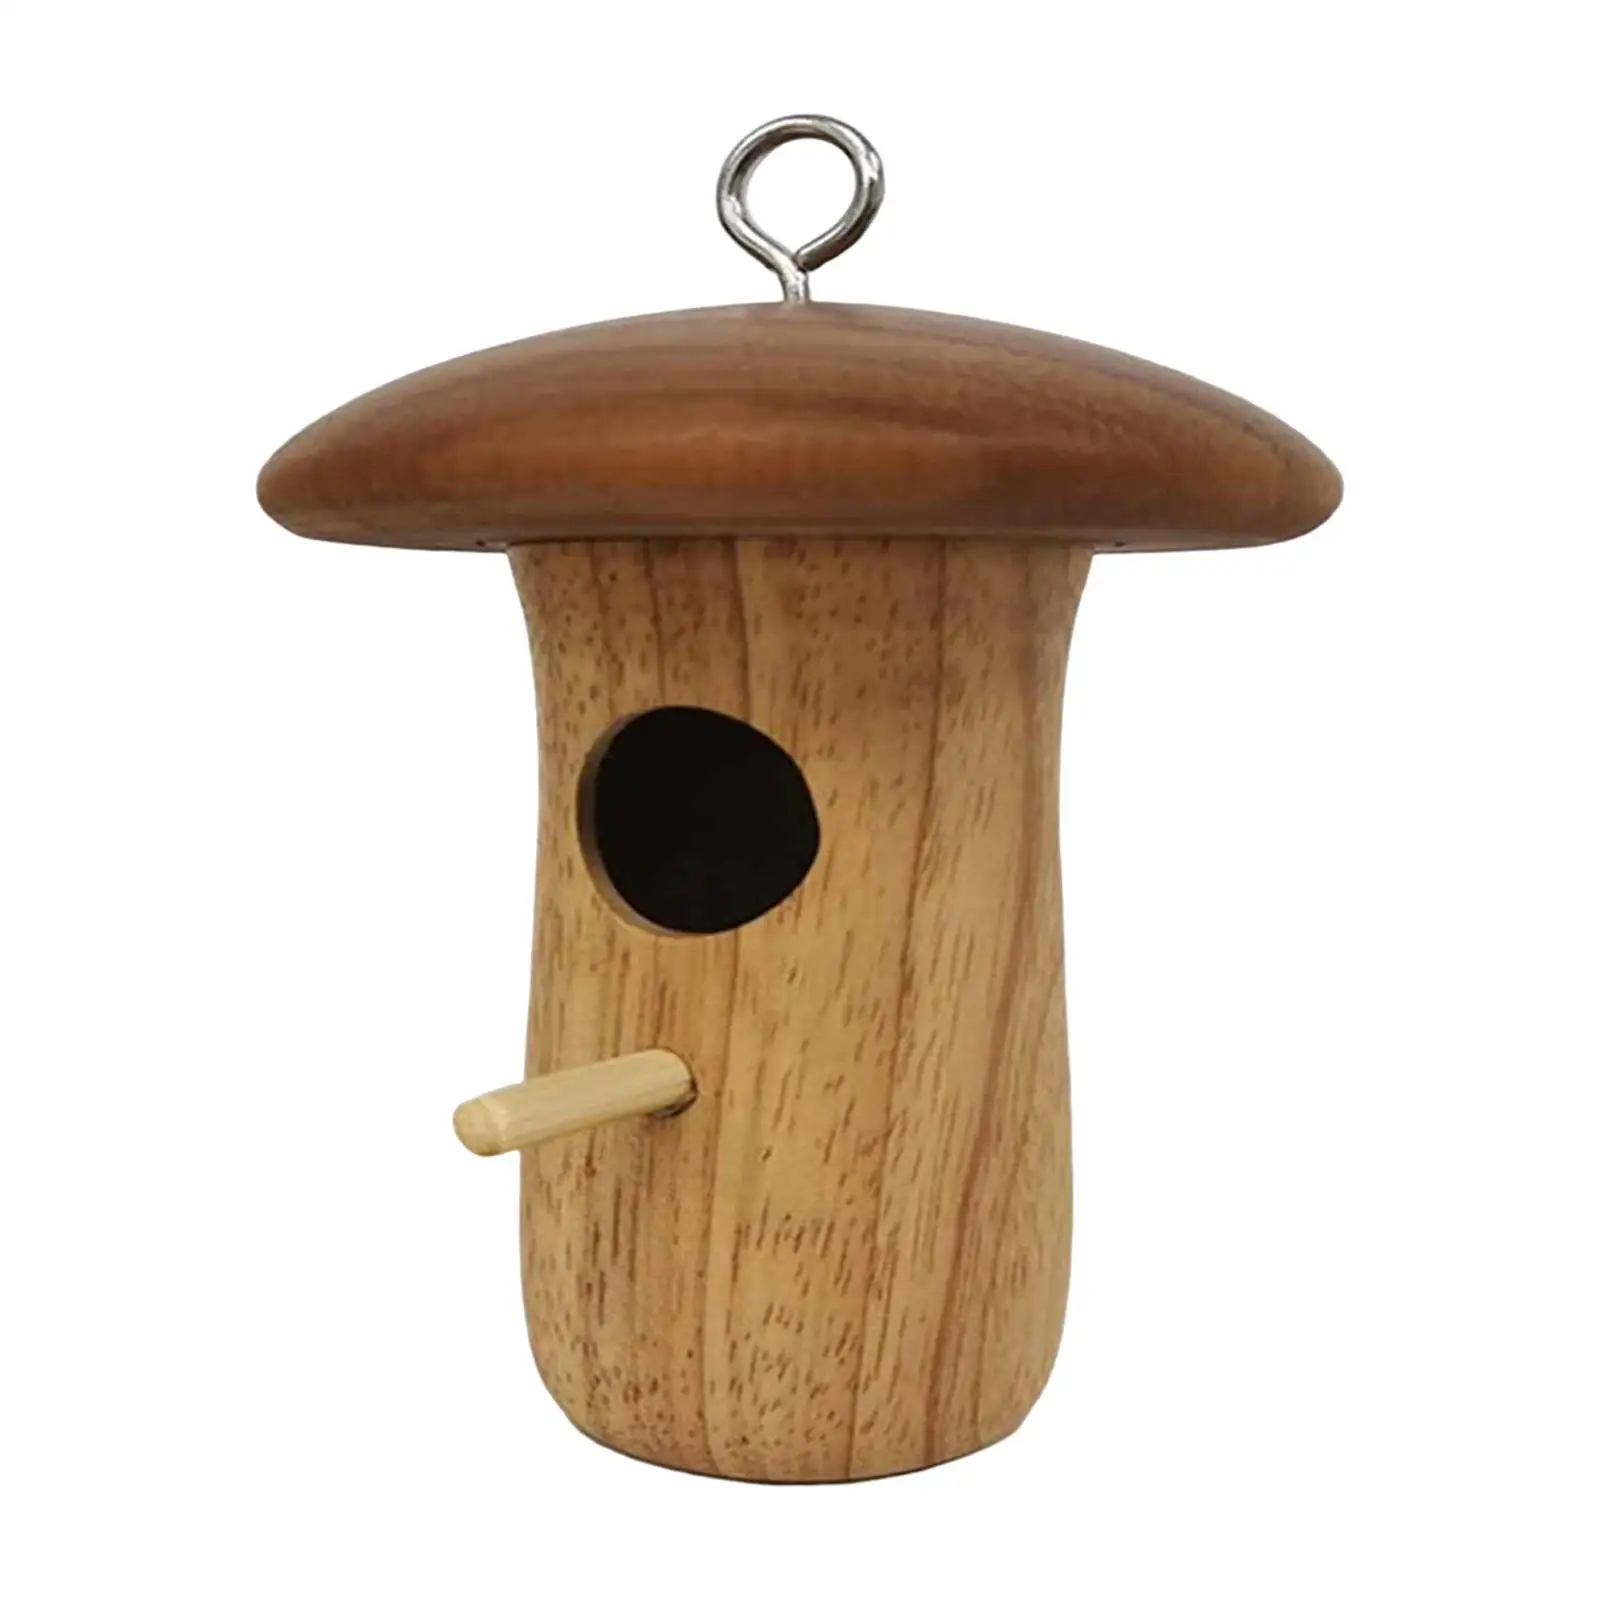 Hummingbird House Pet Accessories Hummingbird Nest for Outdoor Feeding Home